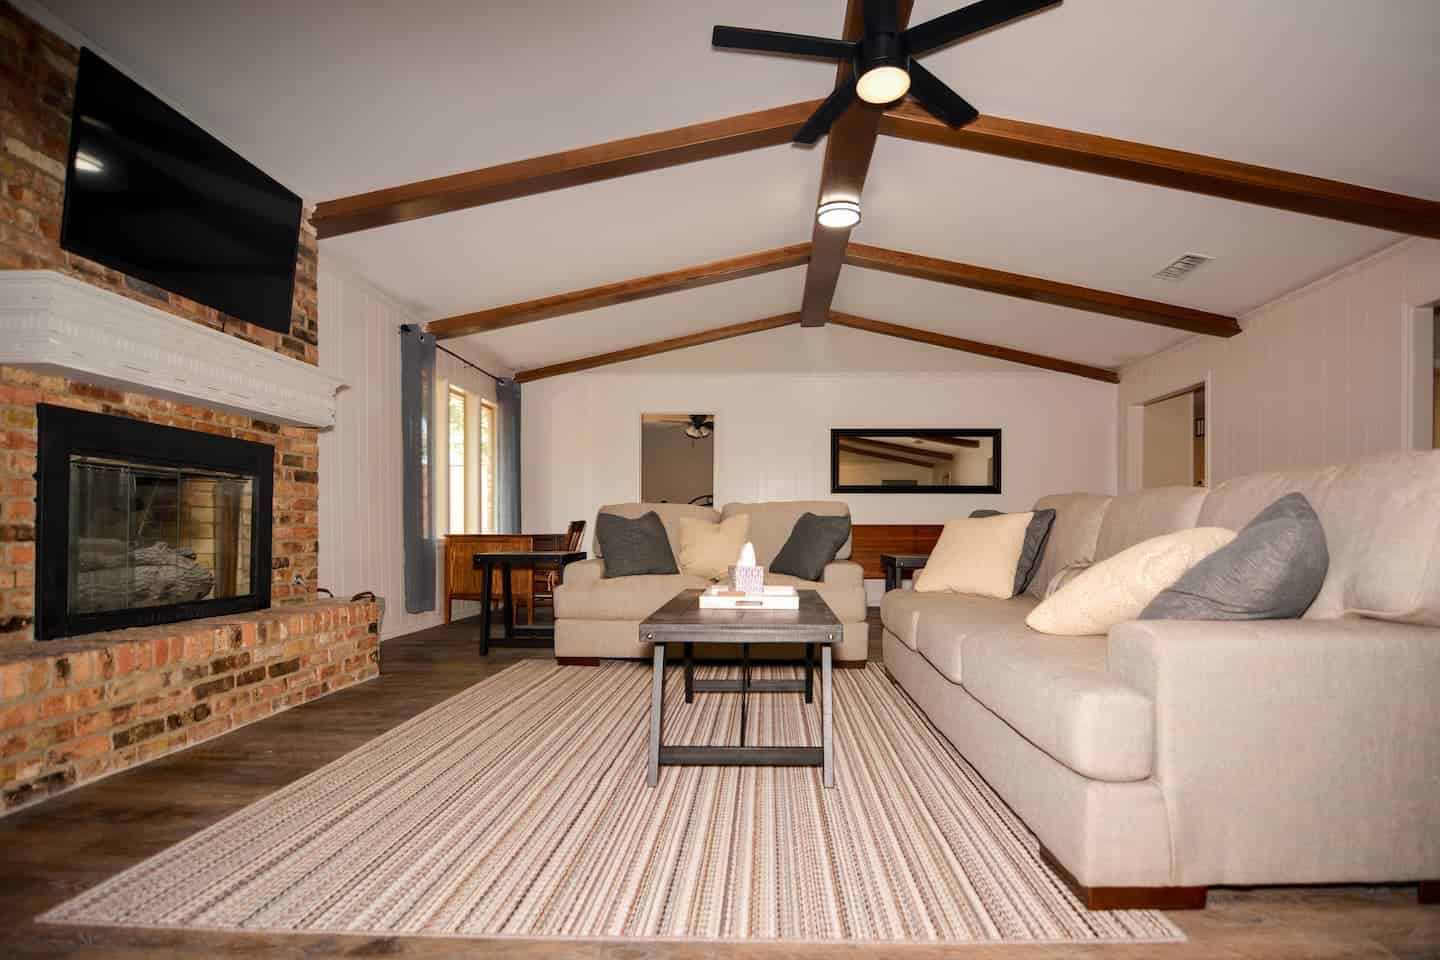 Image of Airbnb rental in Lubbock, Texas